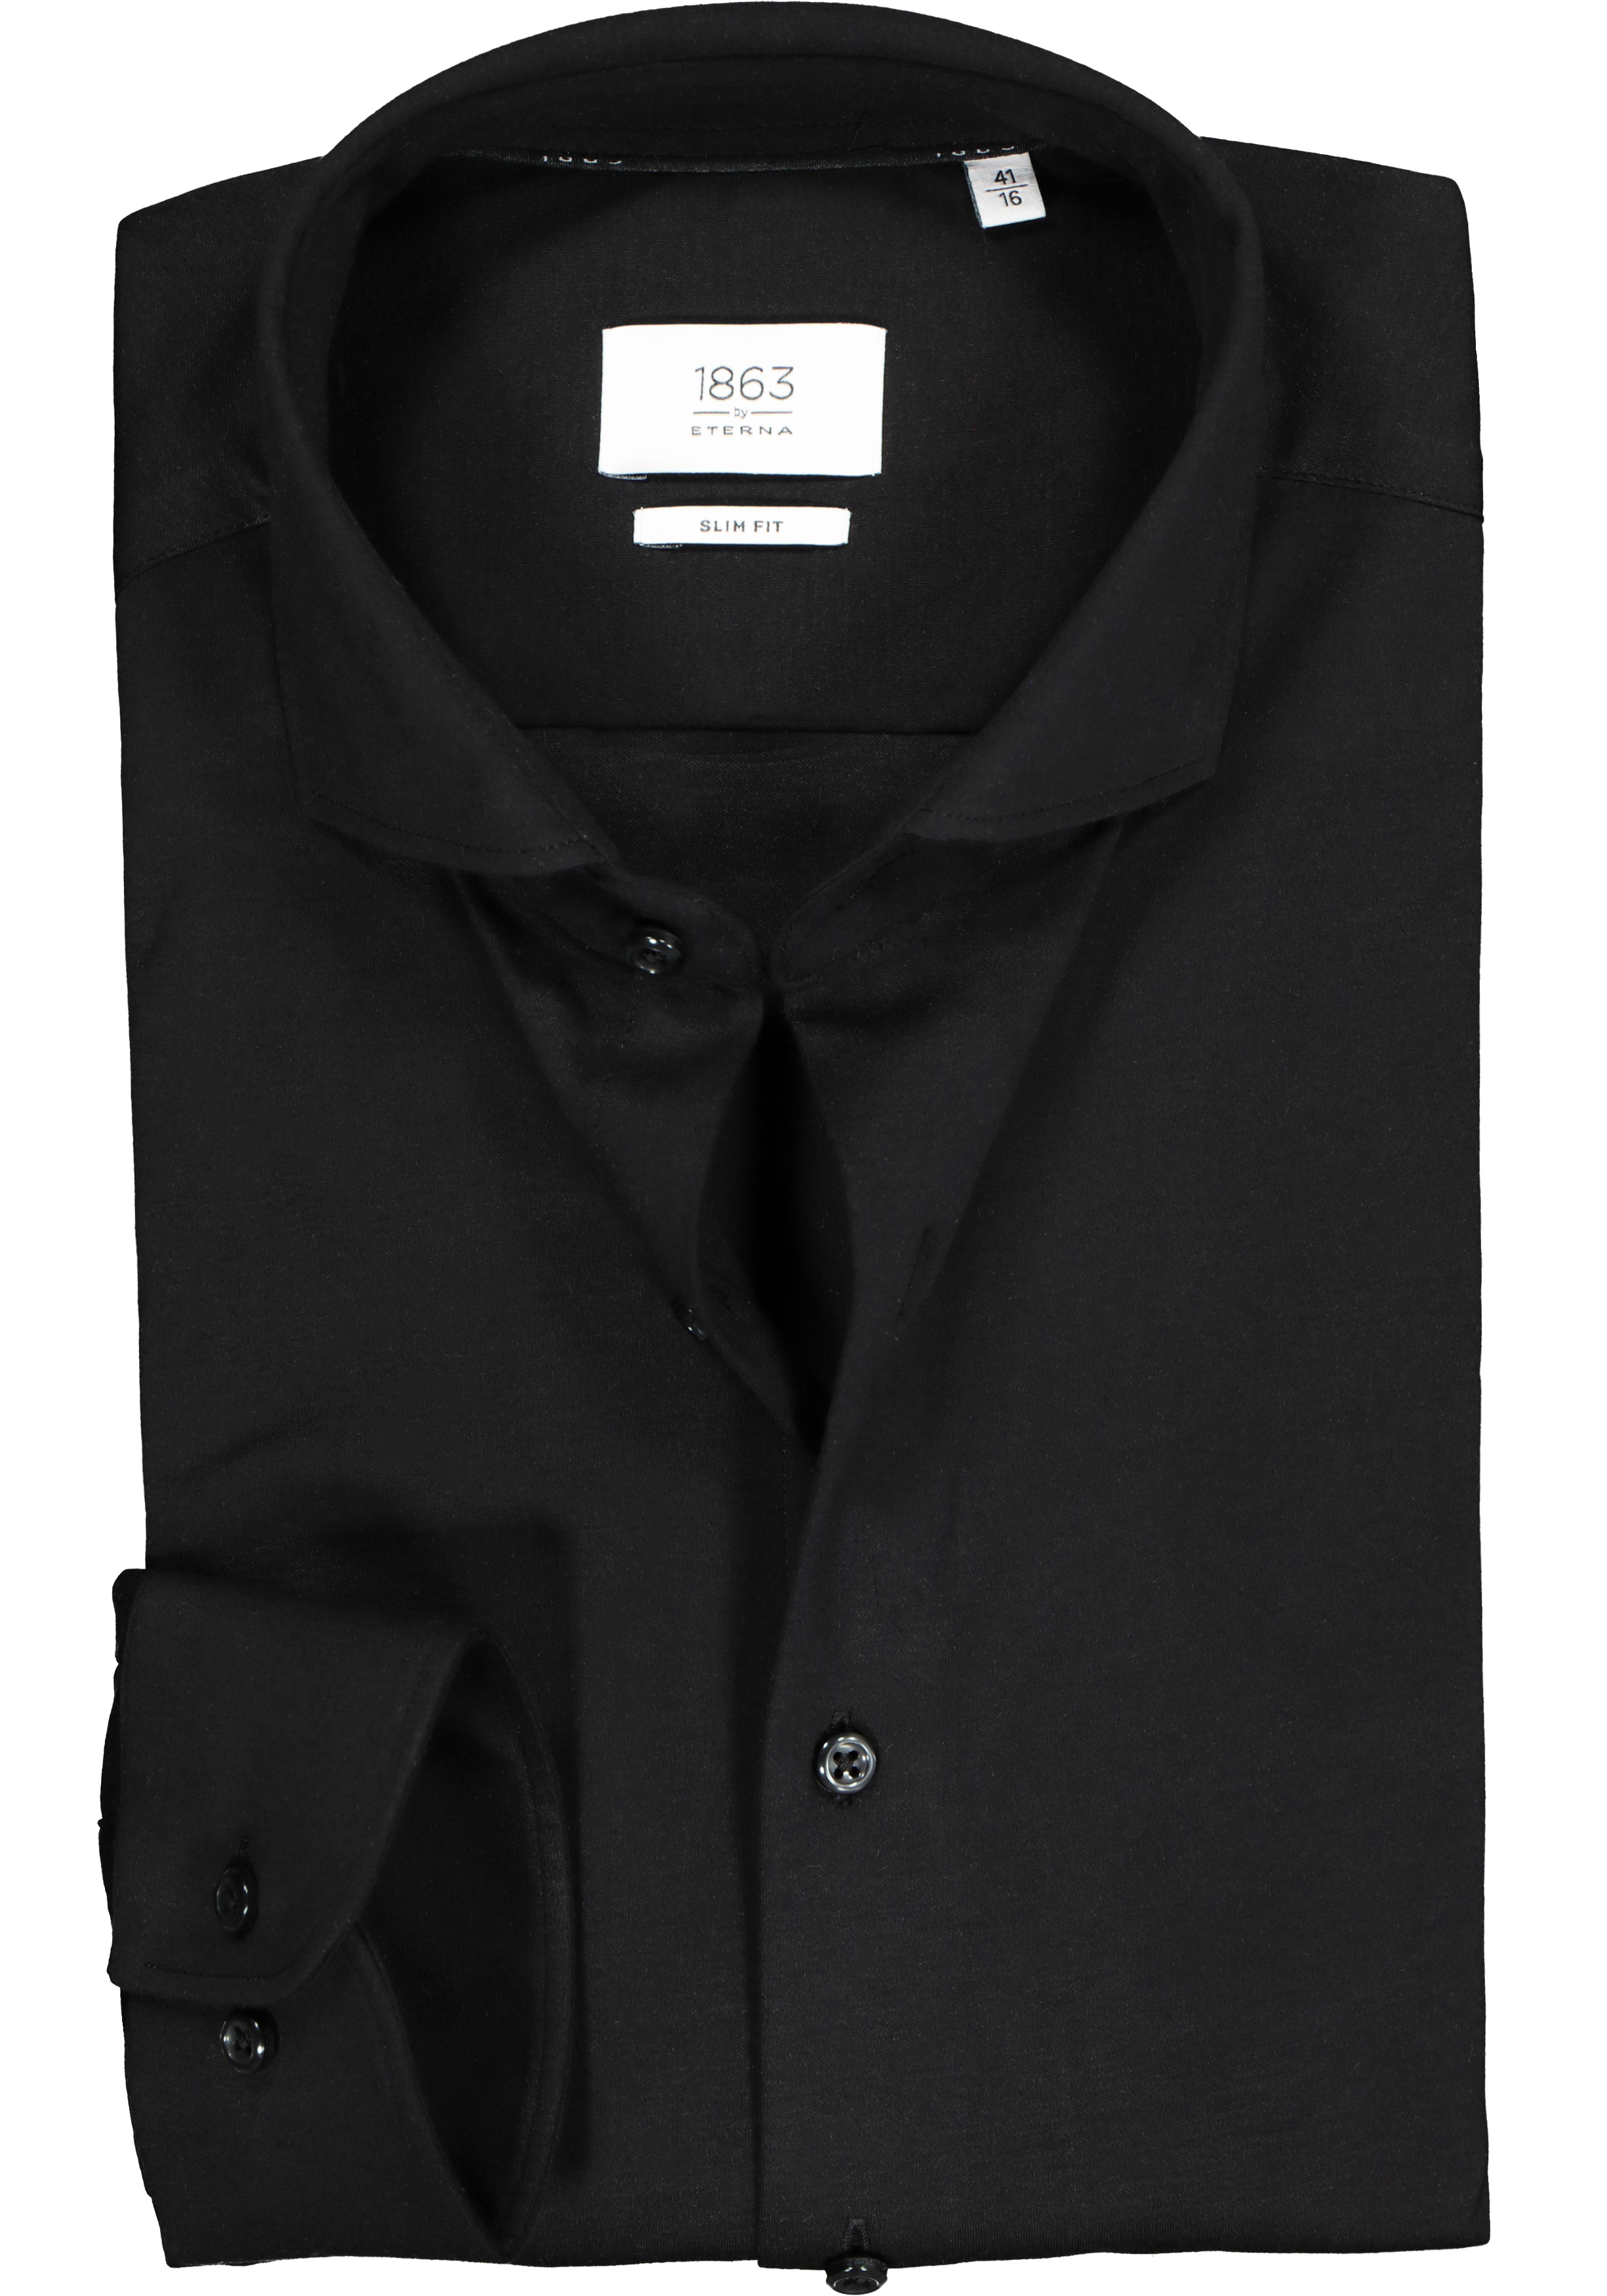 ETERNA 1863 slim fit casual Soft tailoring overhemd, jersey heren overhemd, zwart